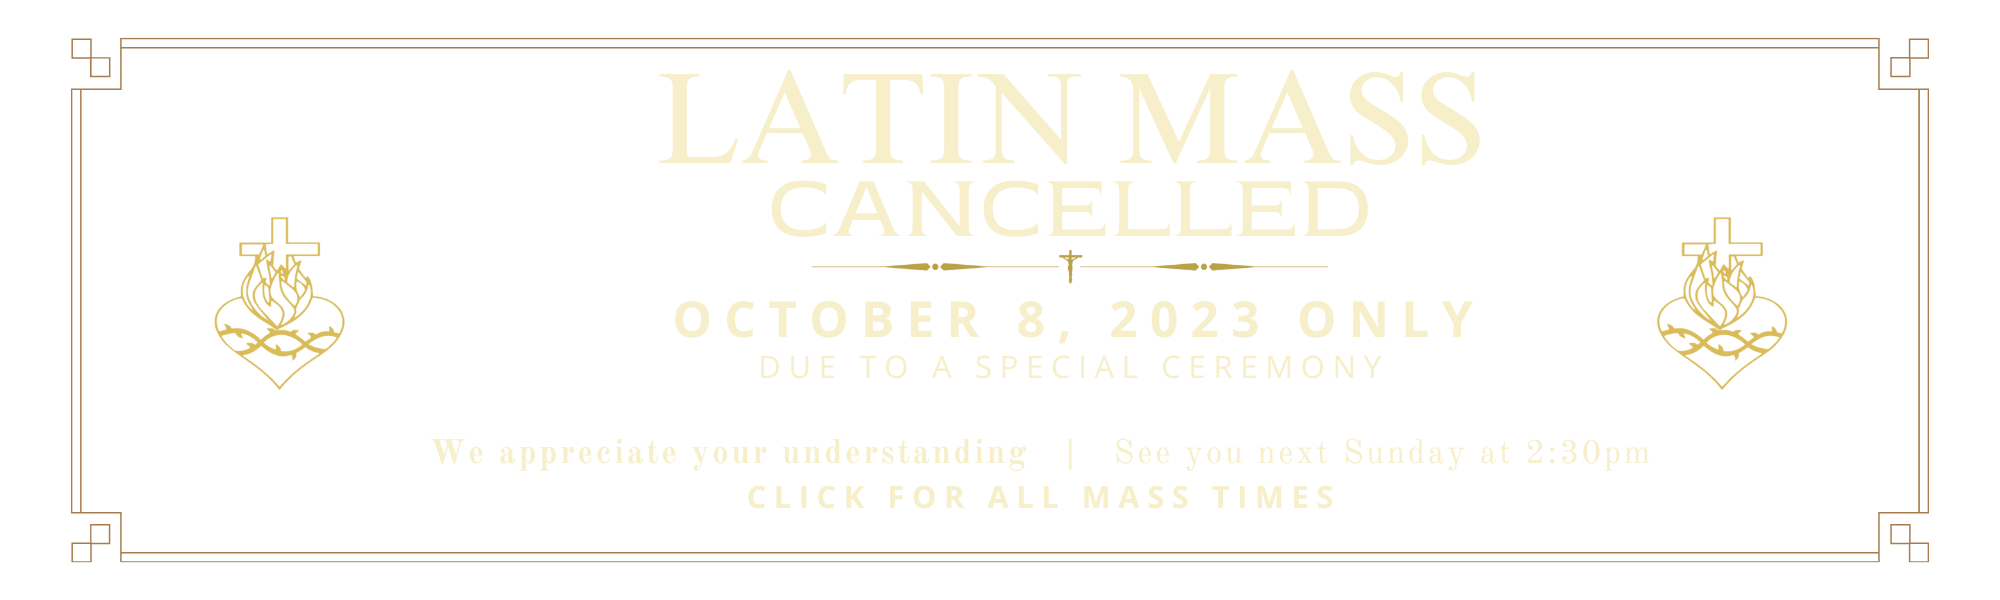 Latin Mass Cancelled Sunday, Oct 8